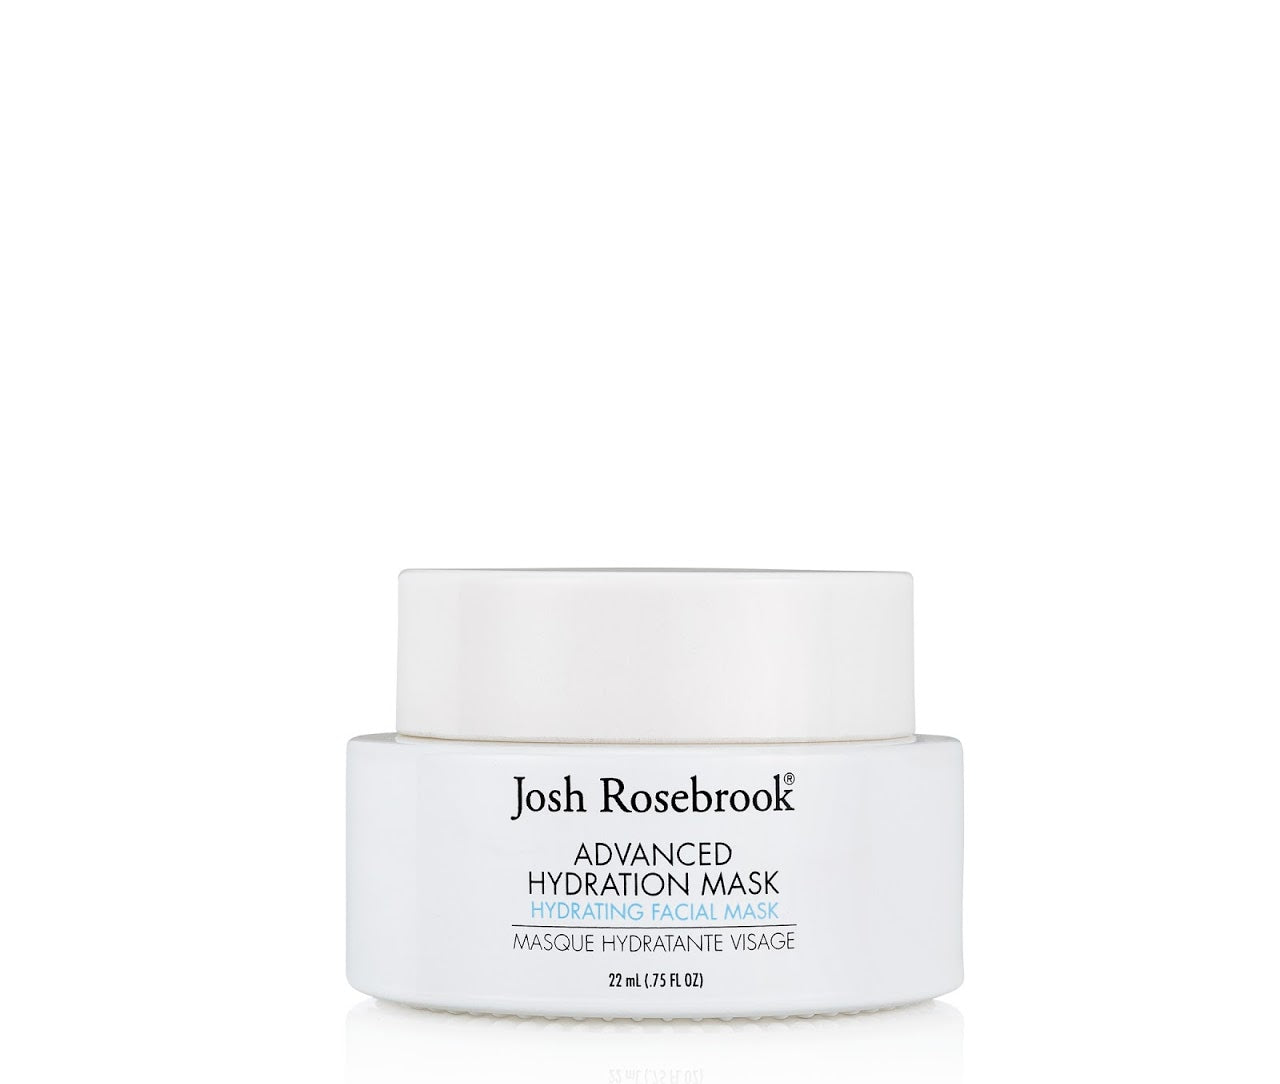 Josh Rosebrook - Advanced Hydration Mask 22 ml